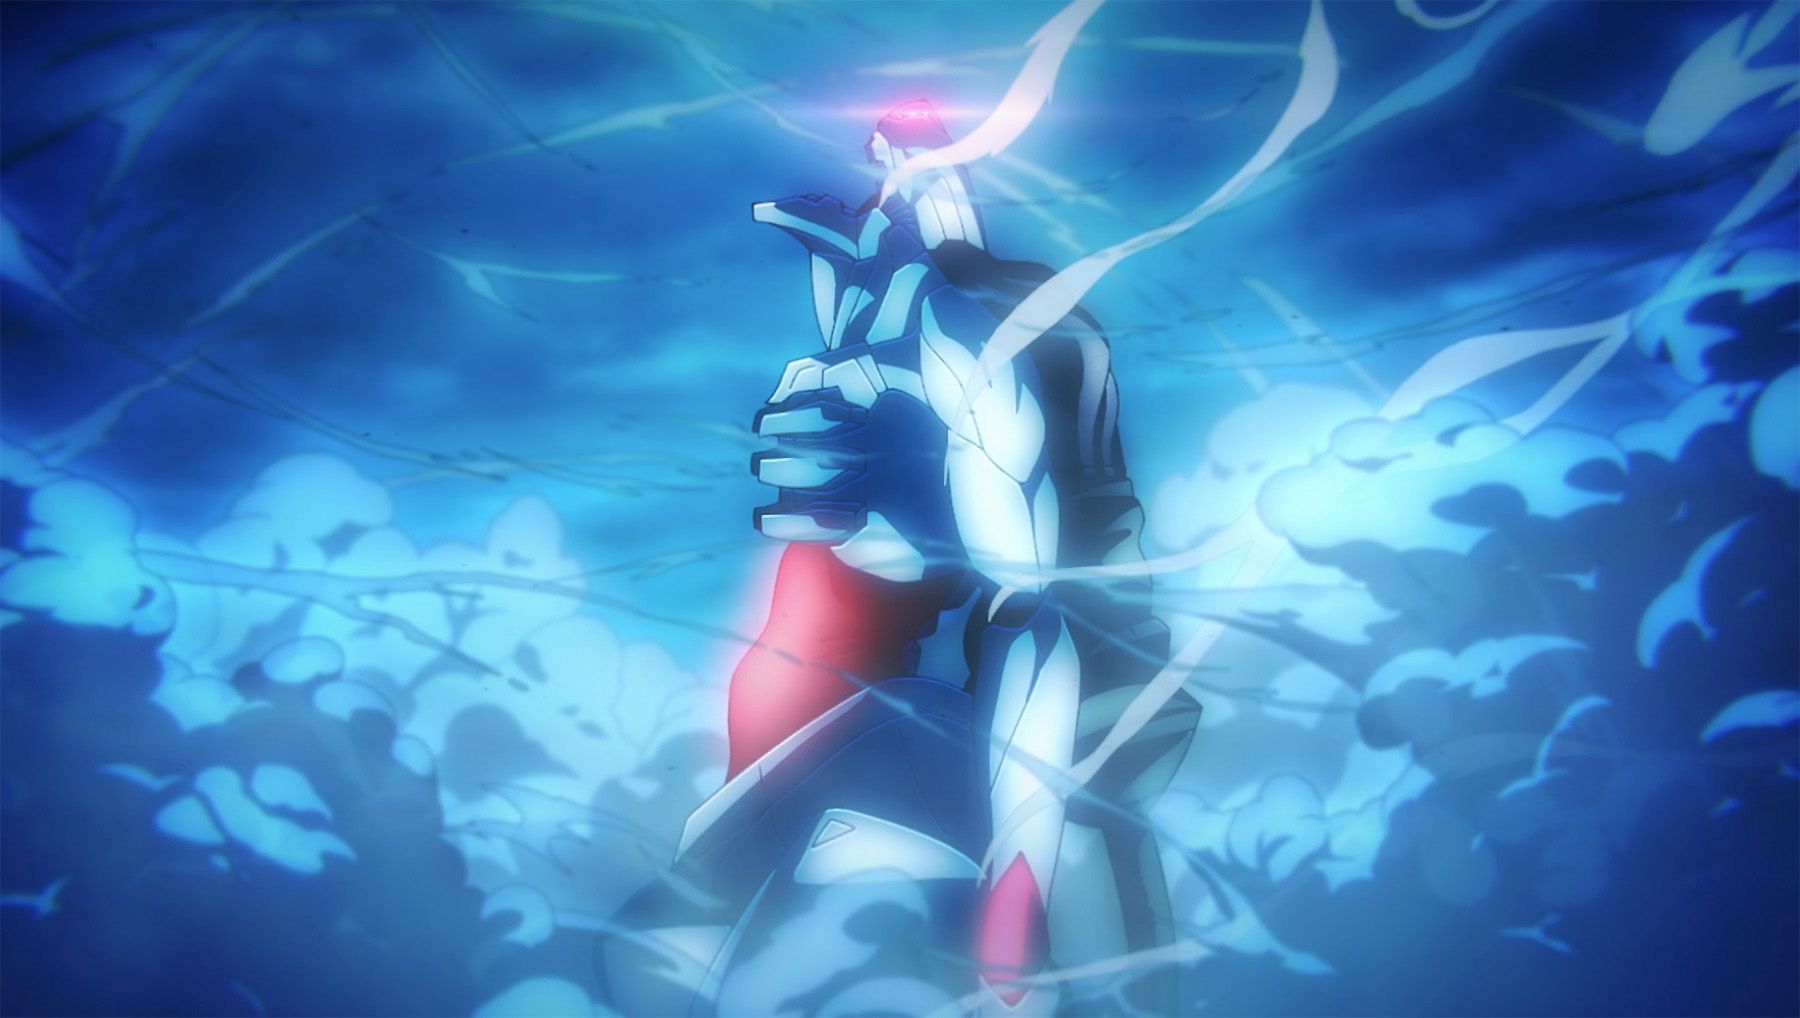 Jujutsu Kaisen season 2 episode 7 was full of major anime Easter eggs